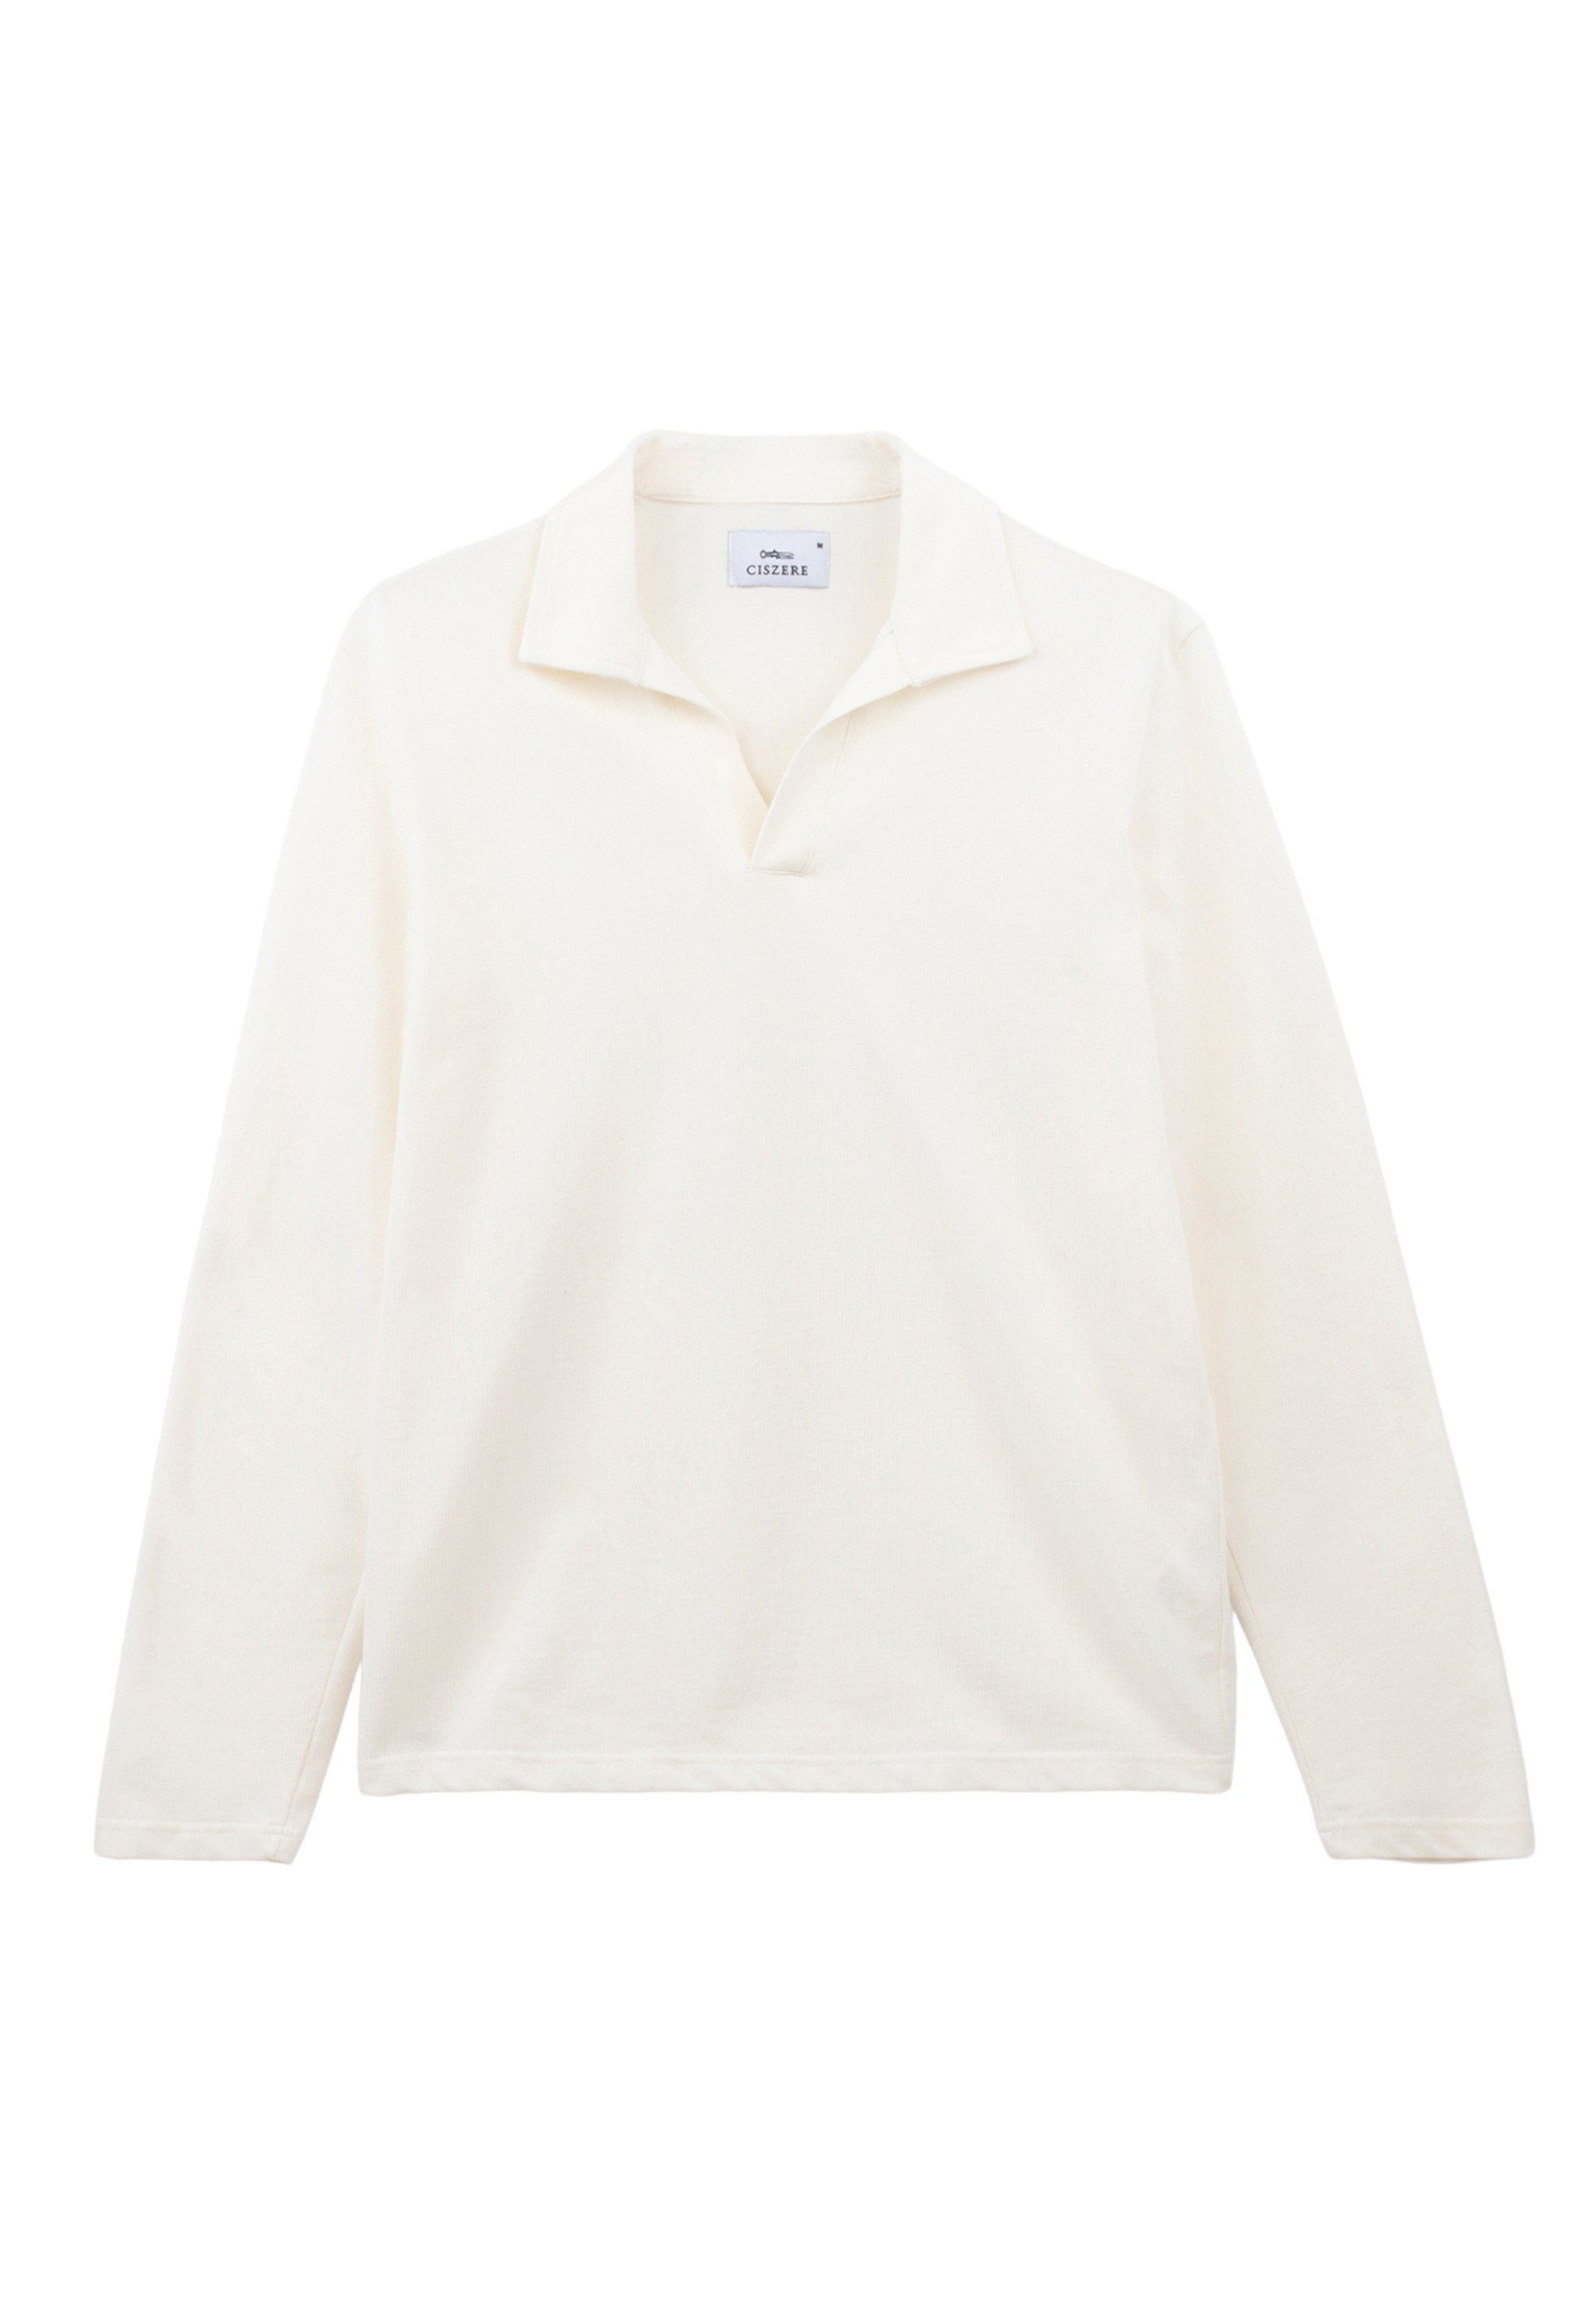 Ciszere Poloshirt Nelson collar. Polo off-white shirt with open